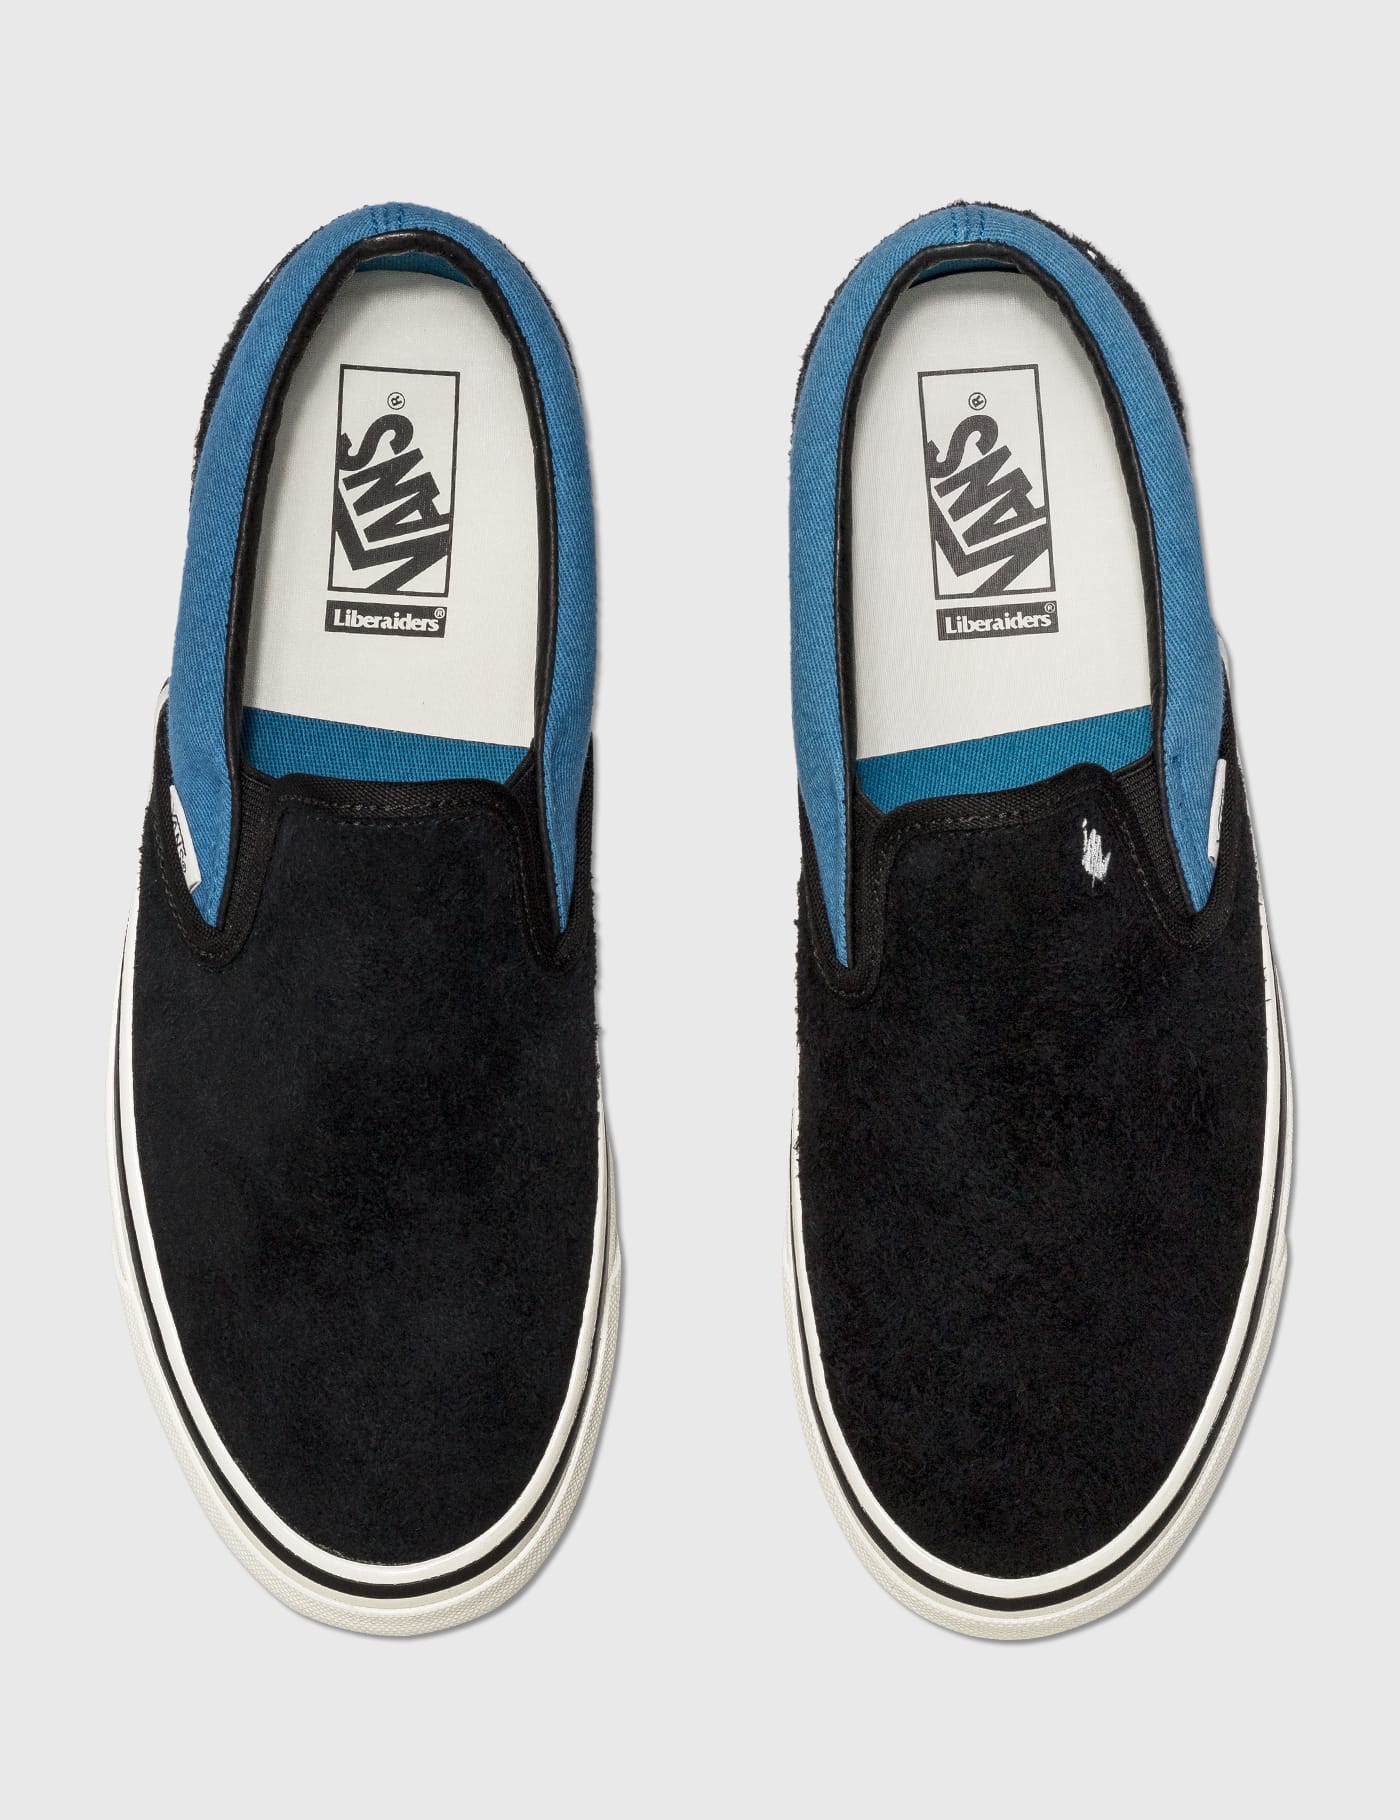 Vans - Vans x Liberaiders Classic Slip-On 9 Sneaker | HBX 